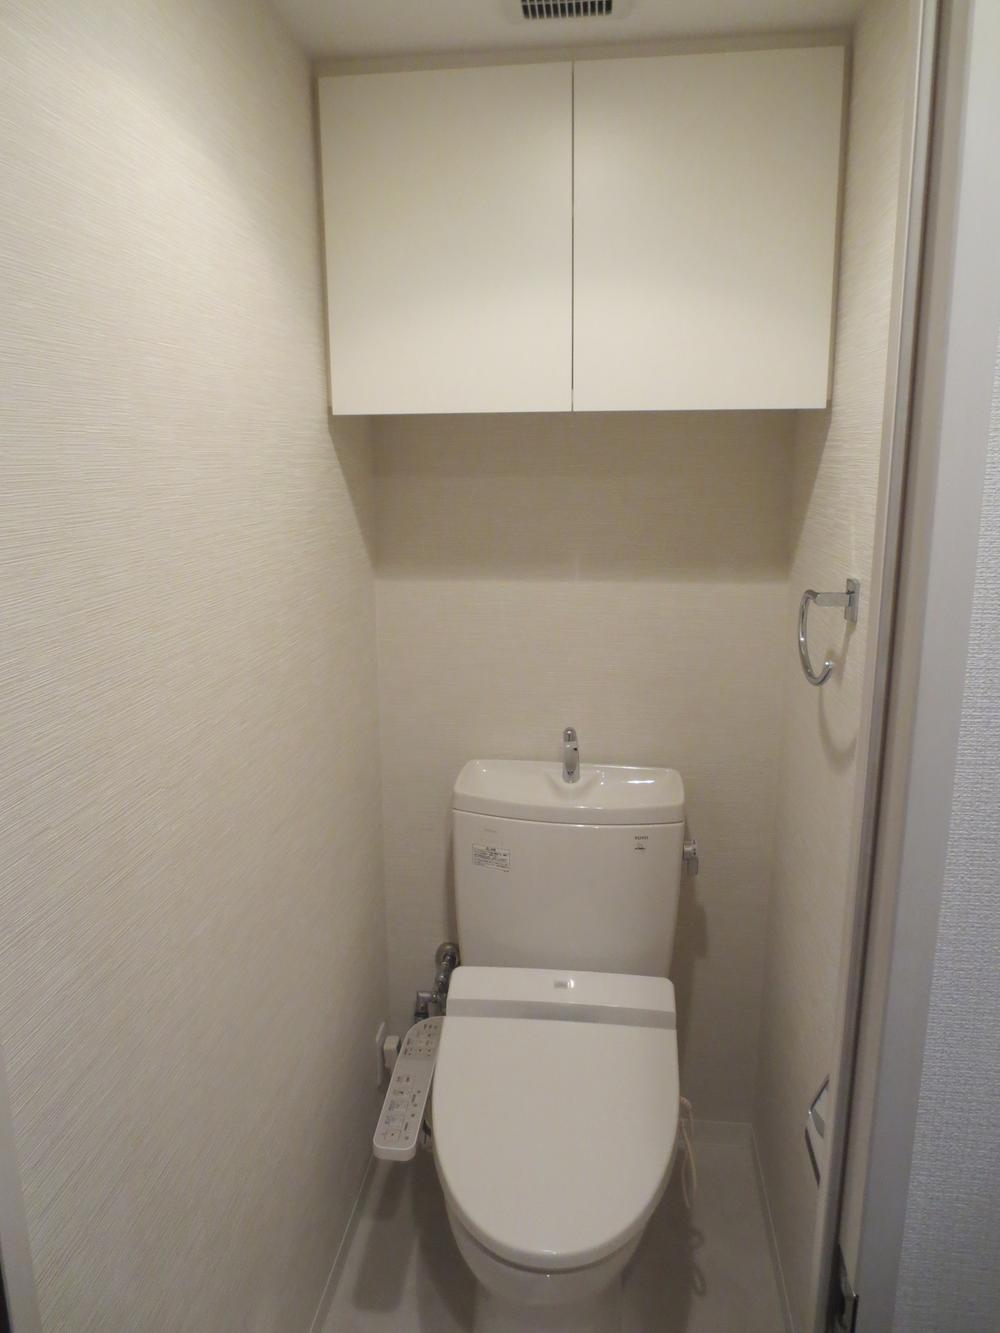 Toilet. With storage